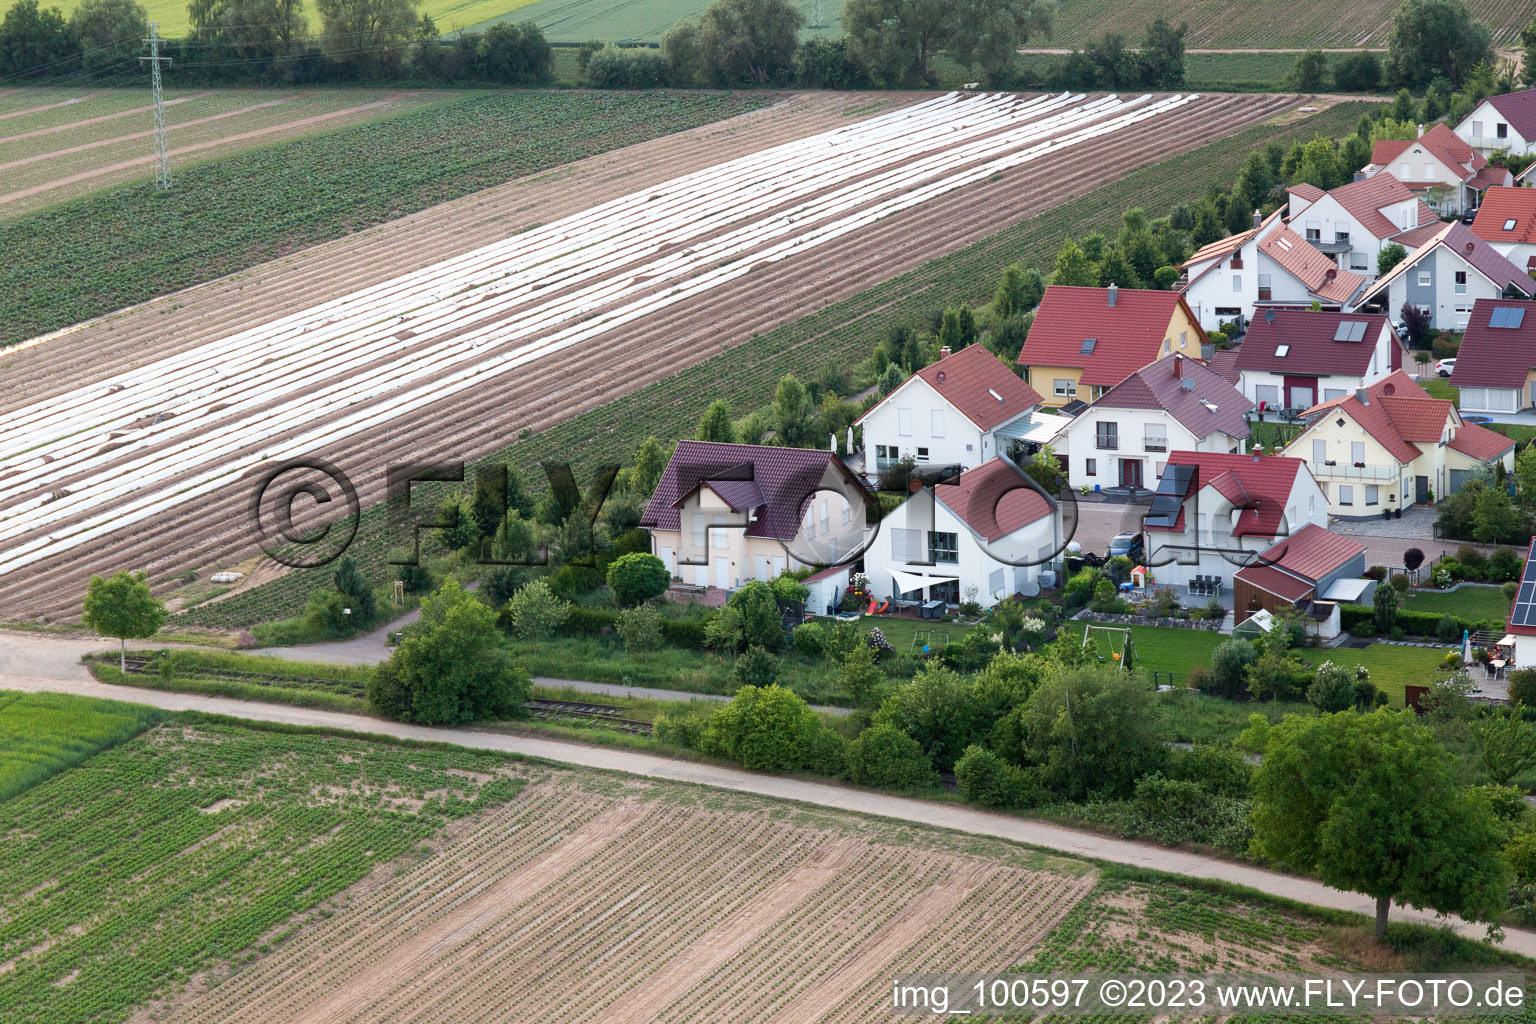 District Mörlheim in Landau in der Pfalz in the state Rhineland-Palatinate, Germany from above